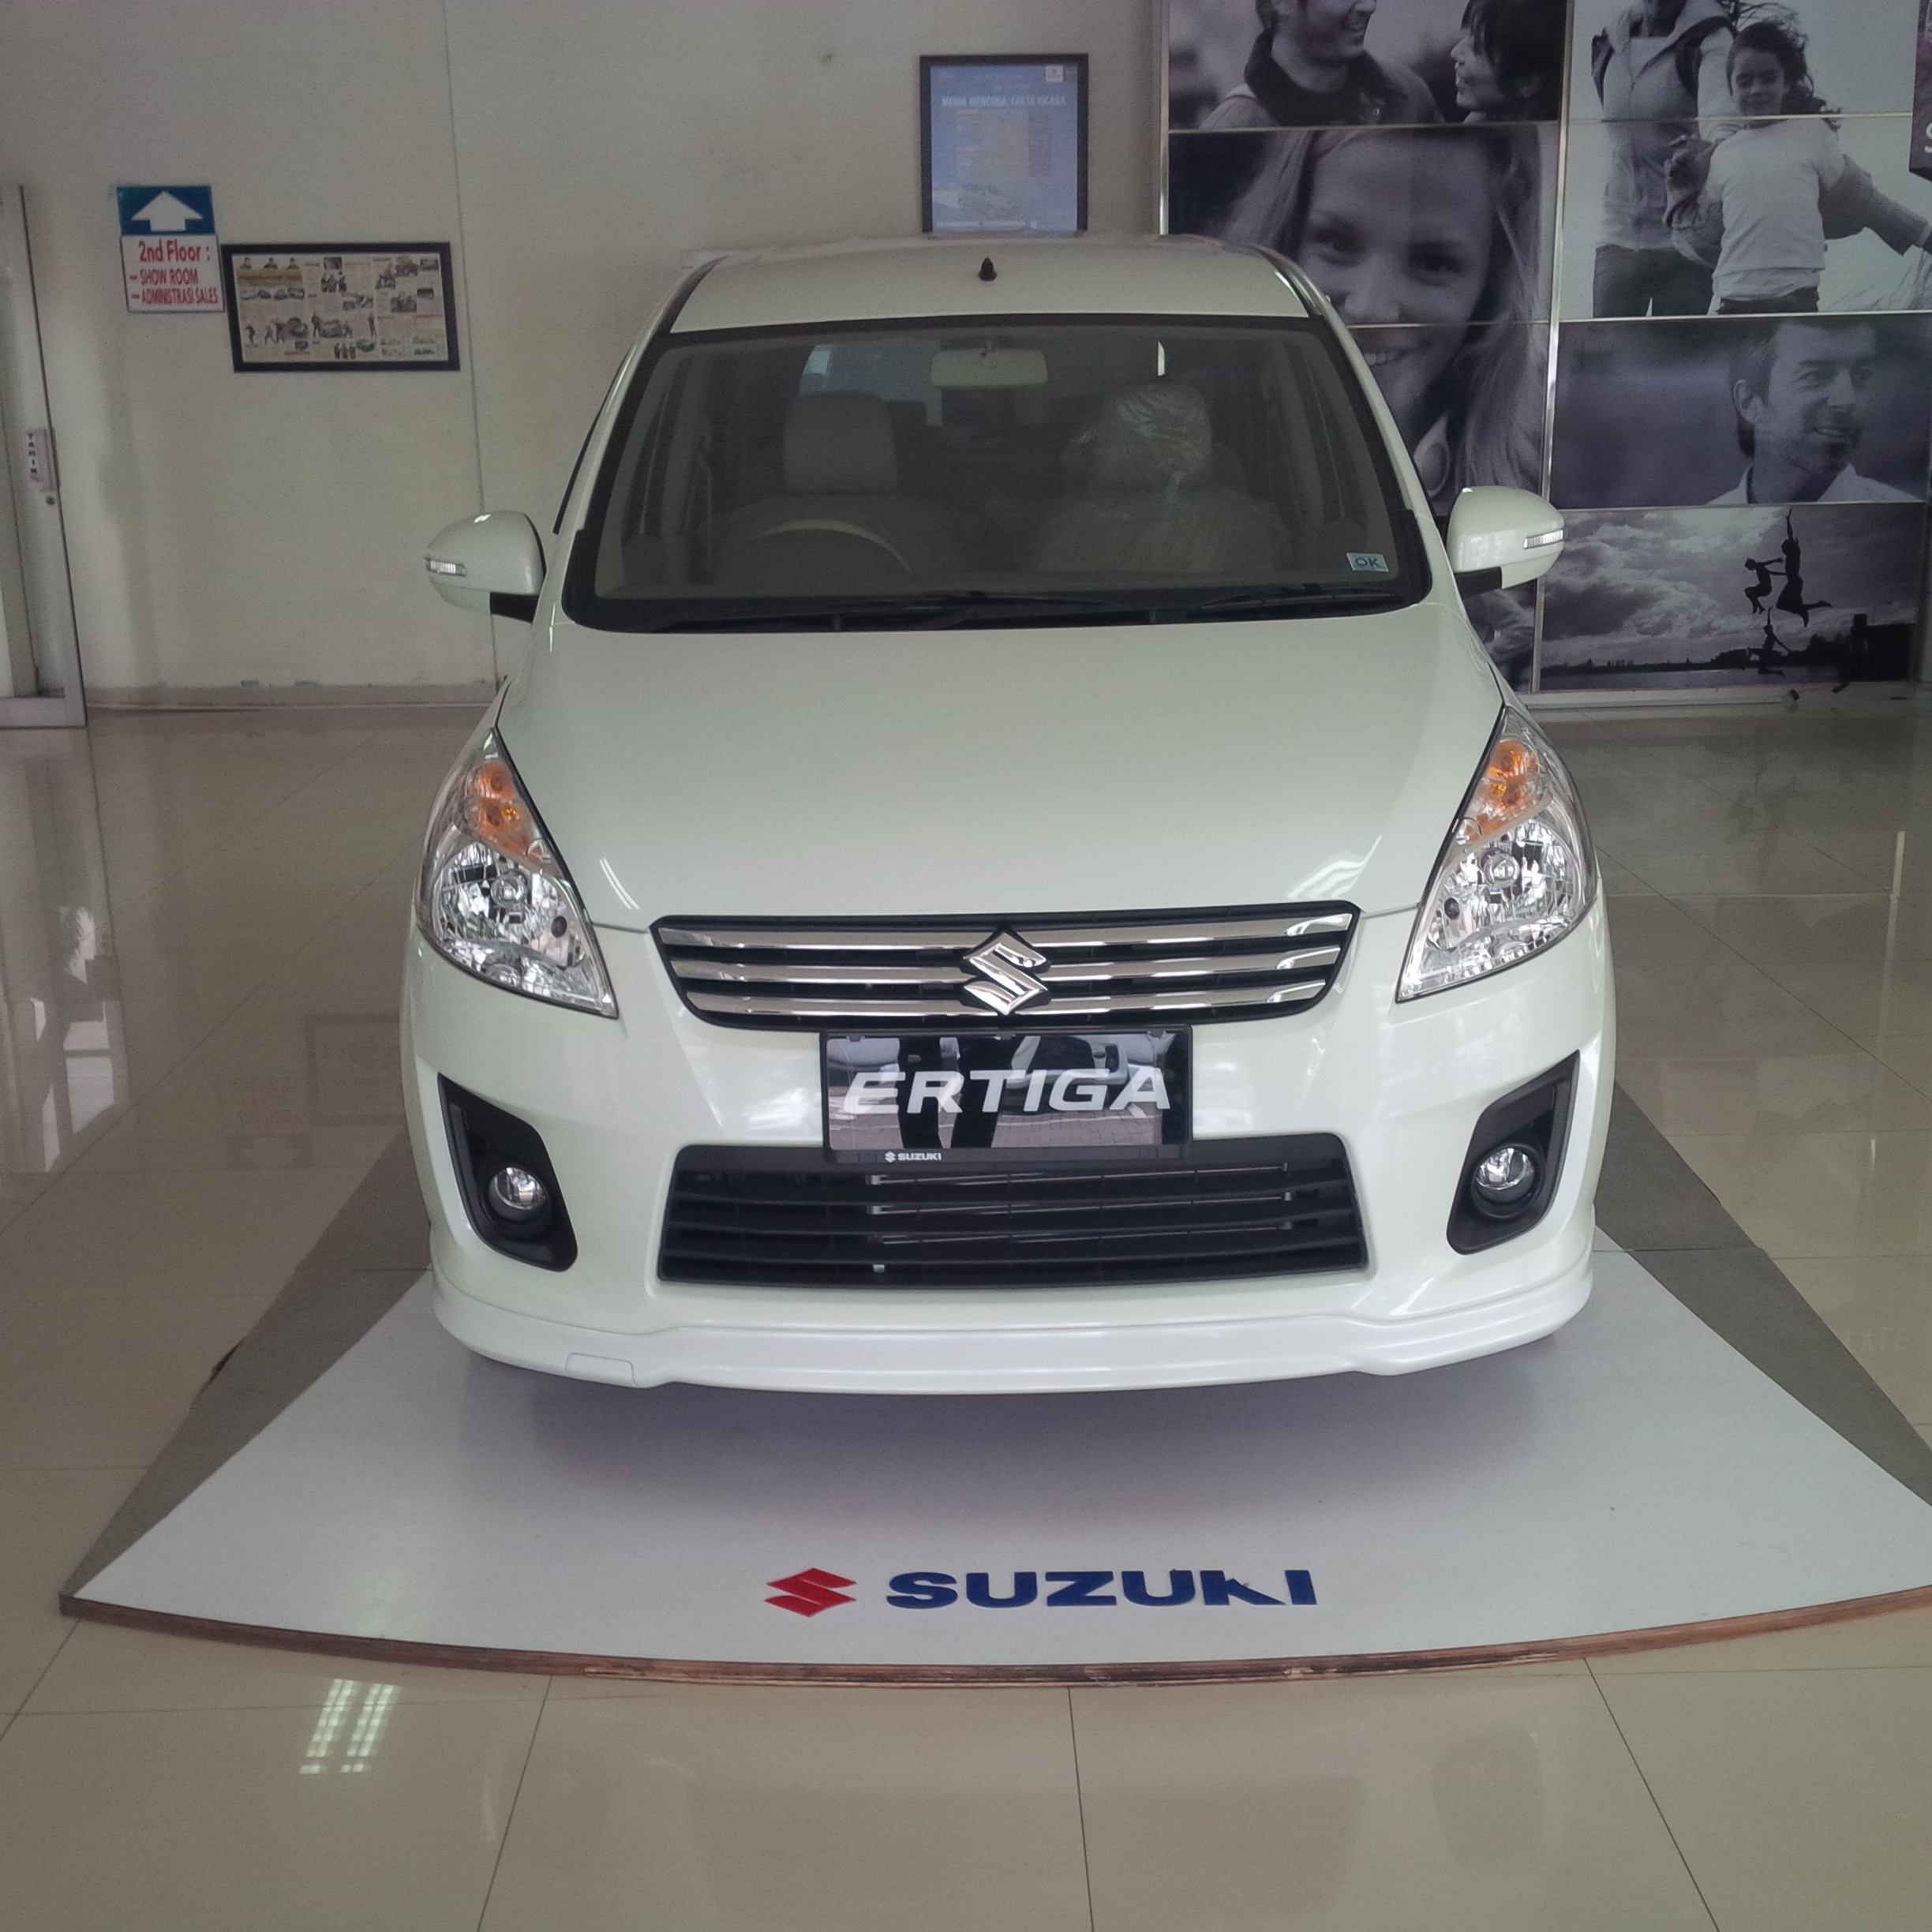 Harga mobil Suzuki 2015 Geovanny Suzuki Blog